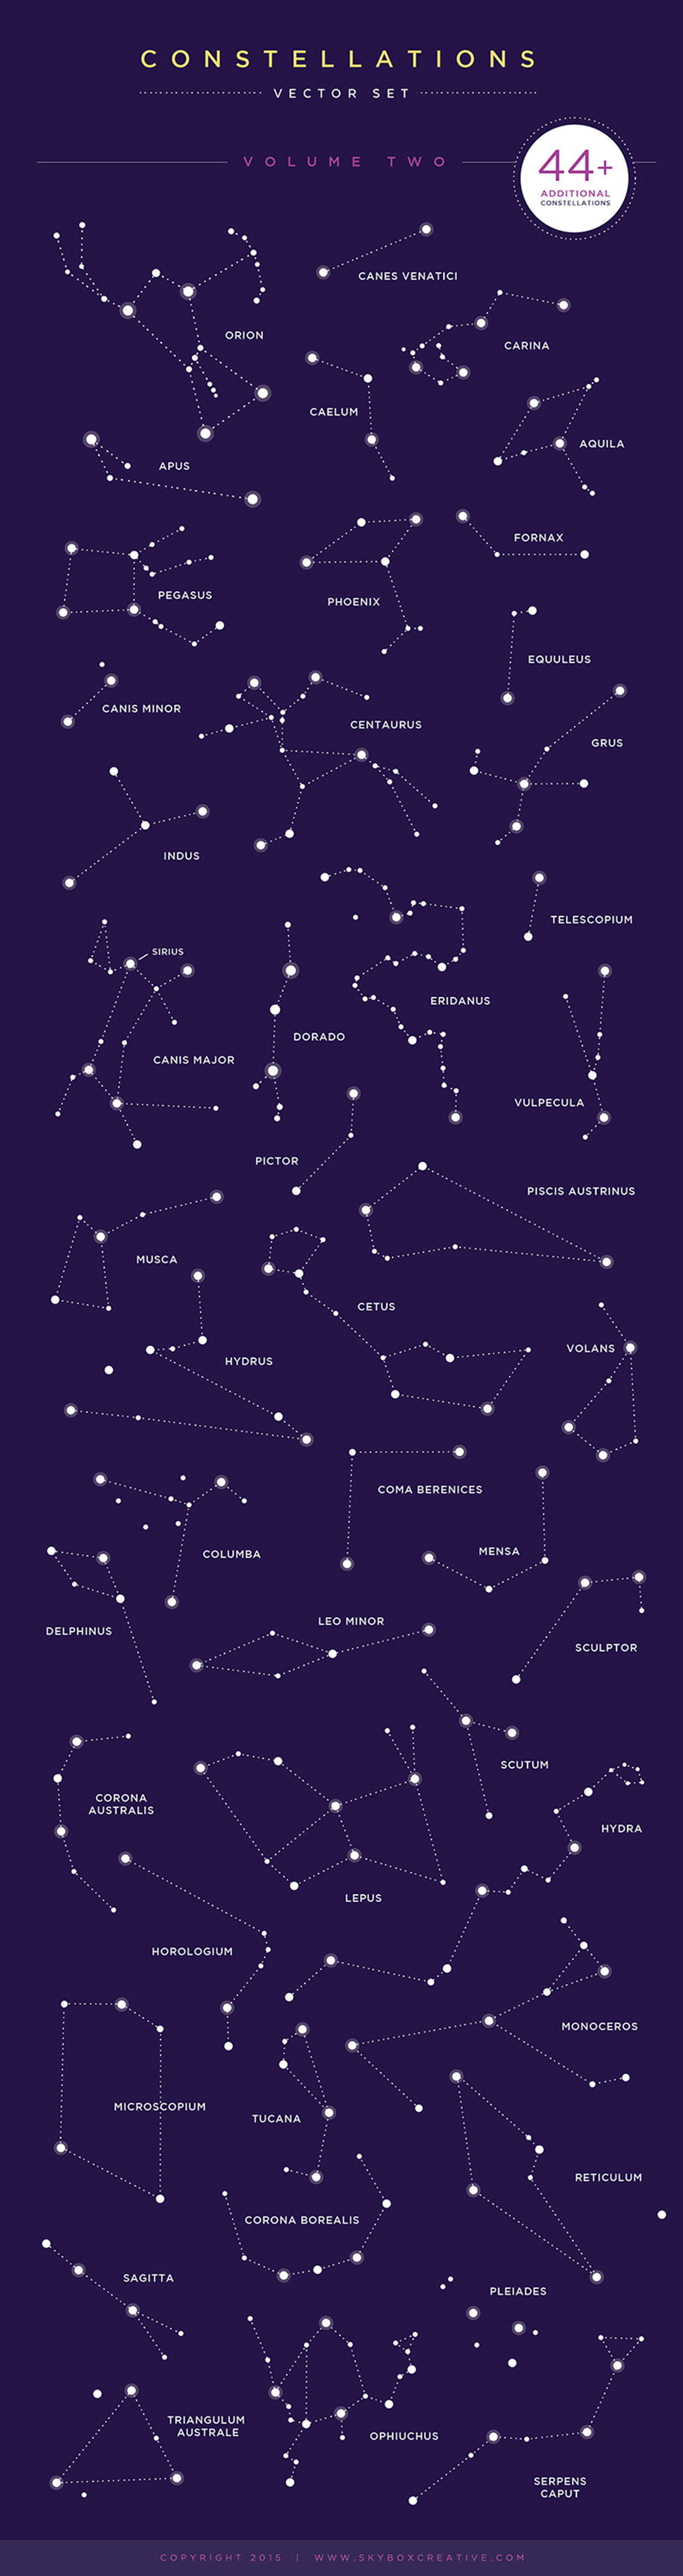 Constellations-Vol-2-2.jpg